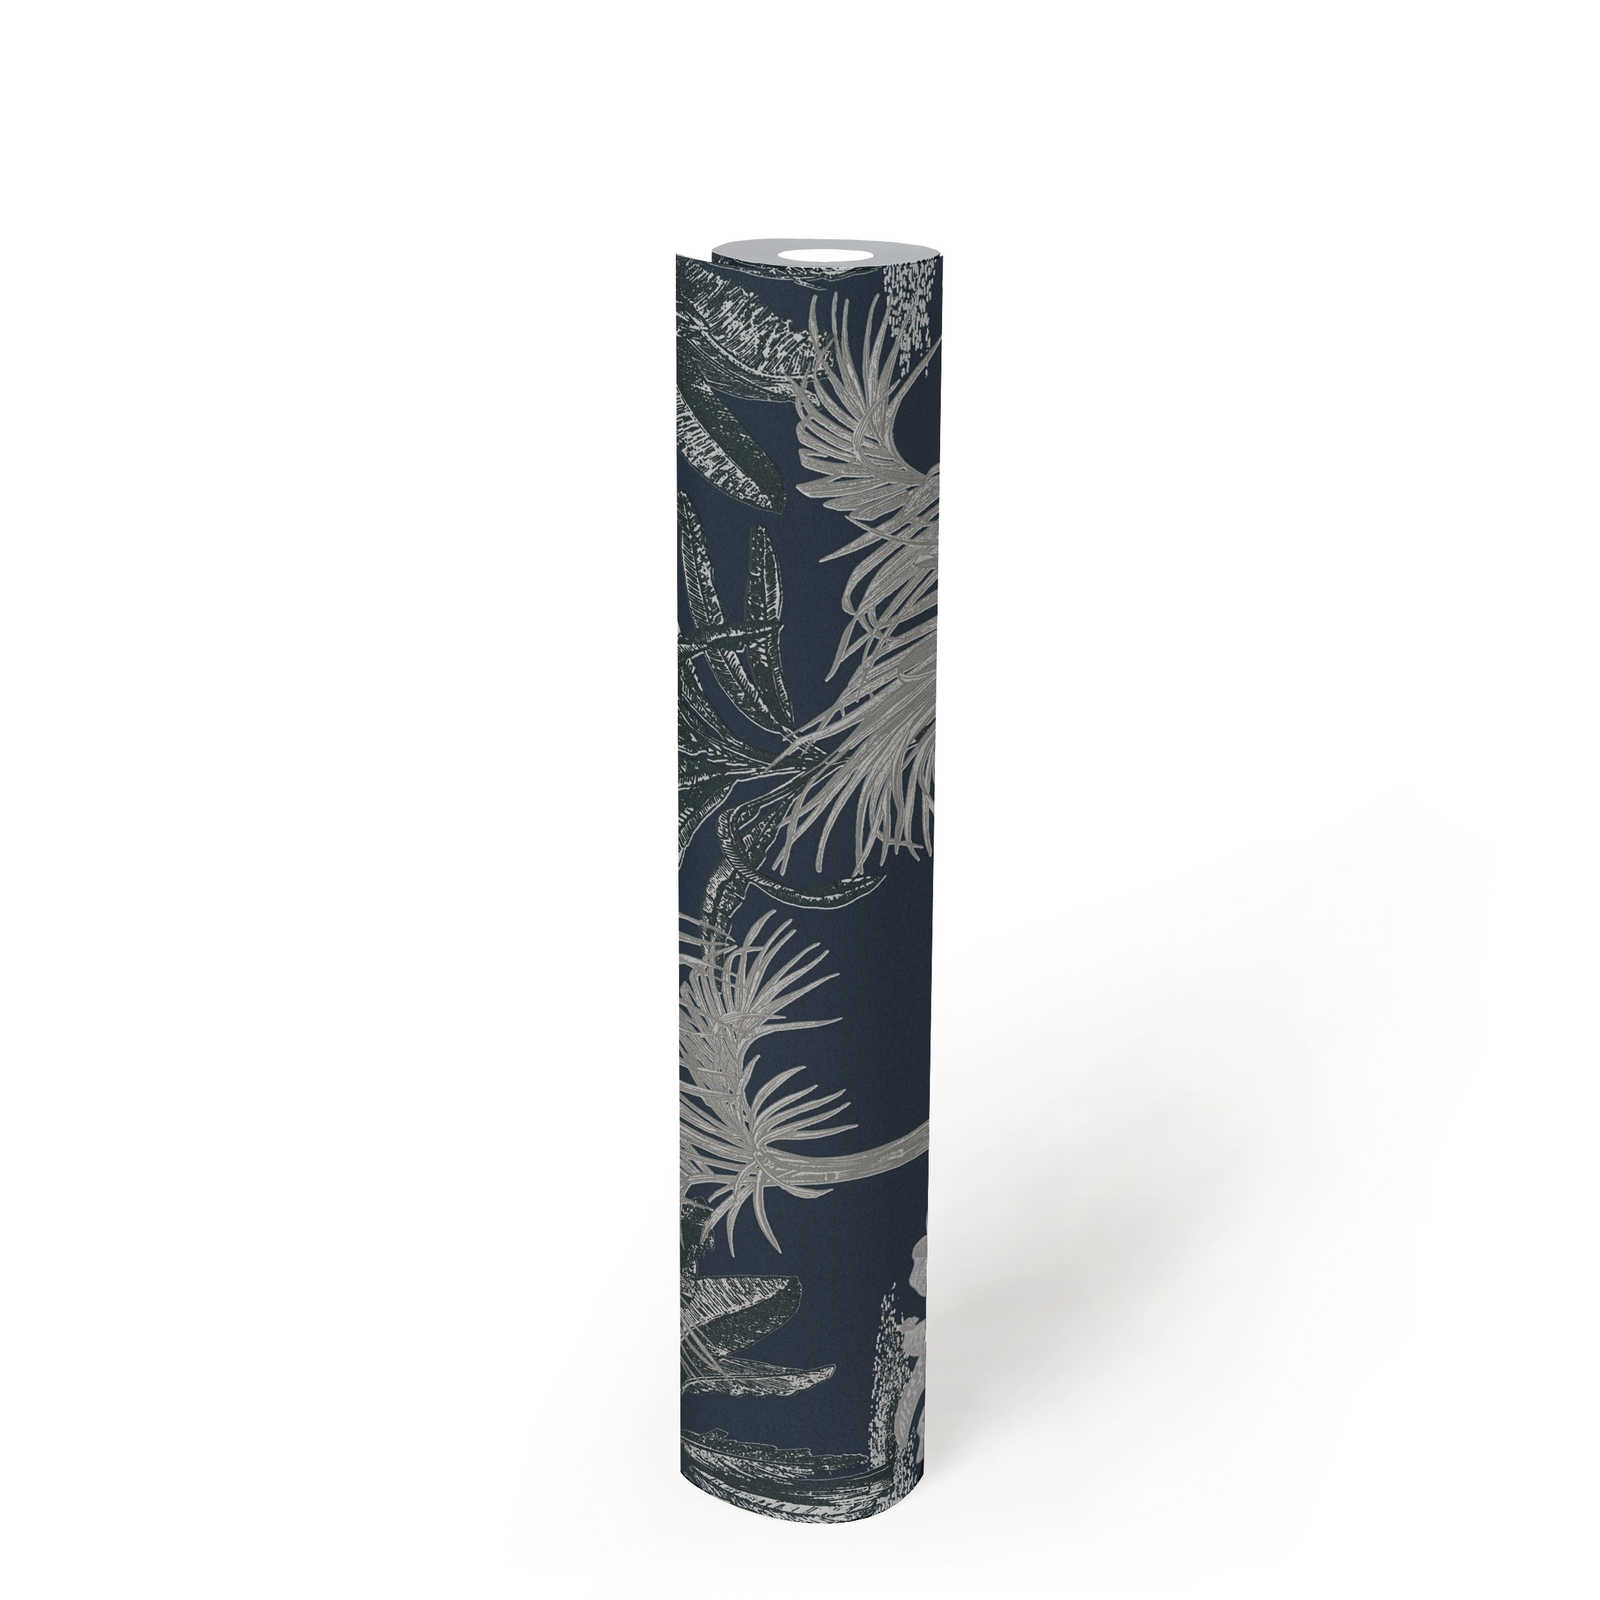             Palm wallpaper MICHASLKY dark blue with textured pattern - blue, grey
        